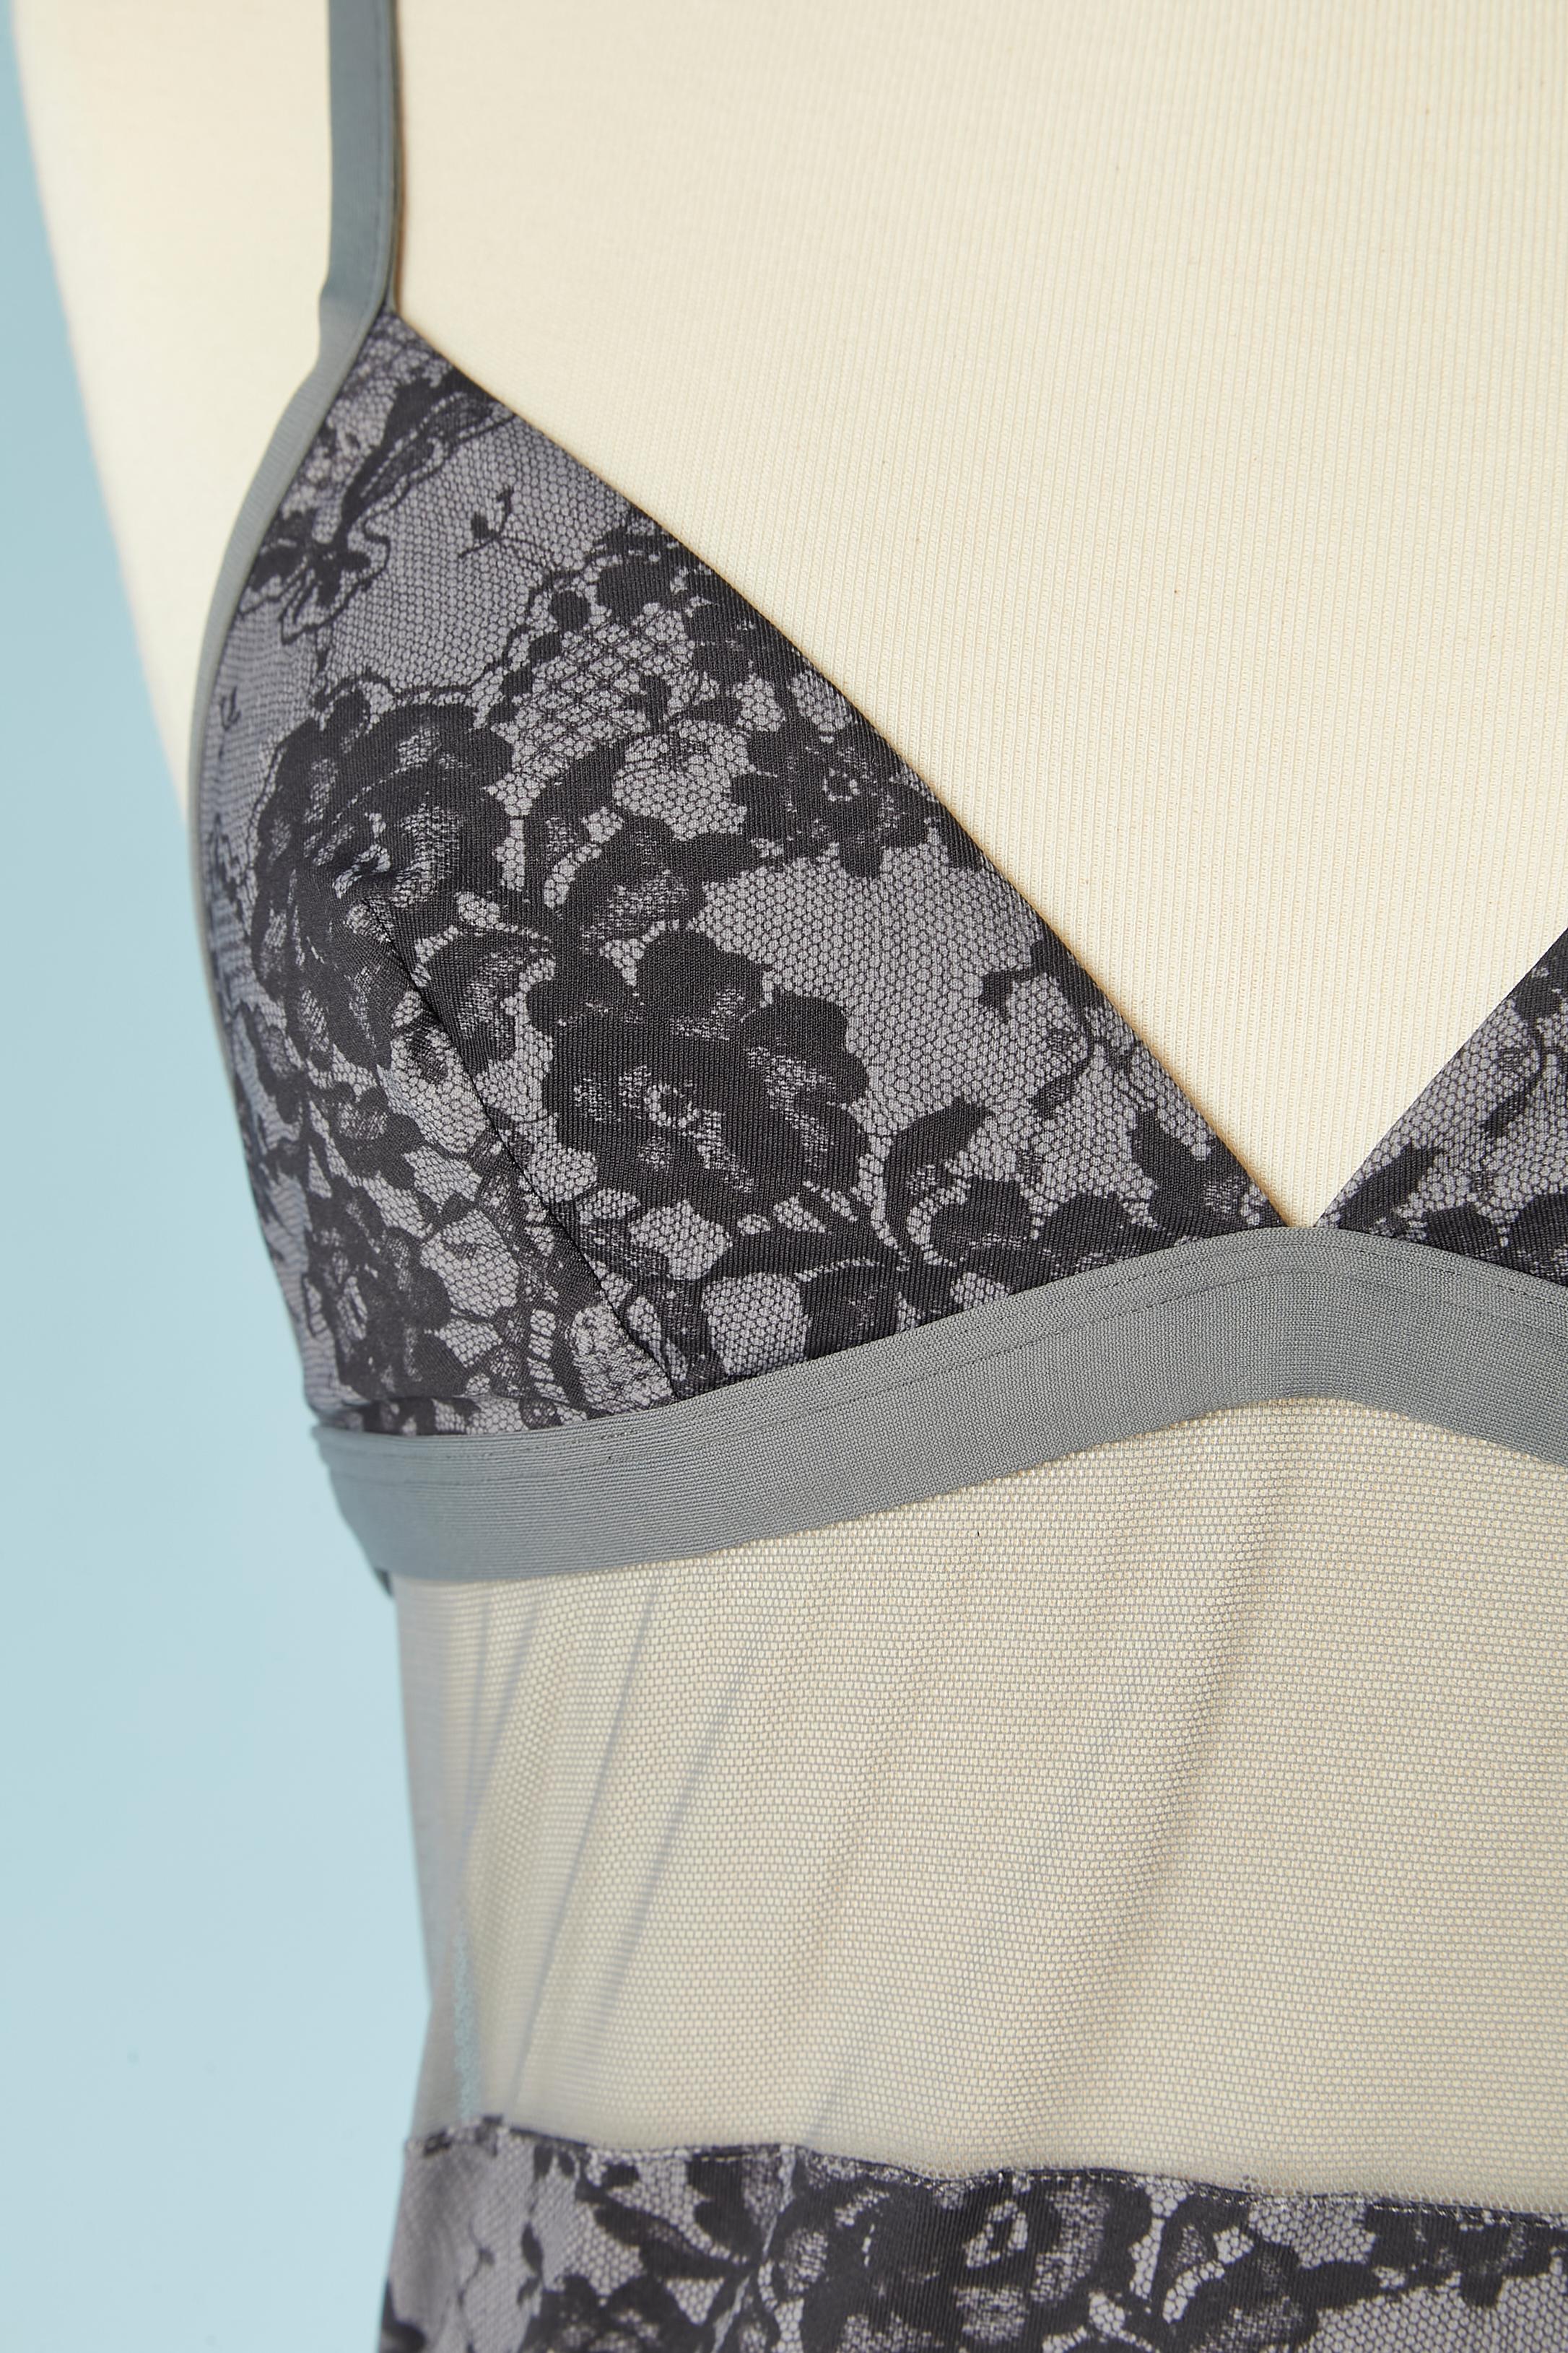 Grey mini slip dress with black laces print. Fabric composition: nylon & elastane
SIZE M 